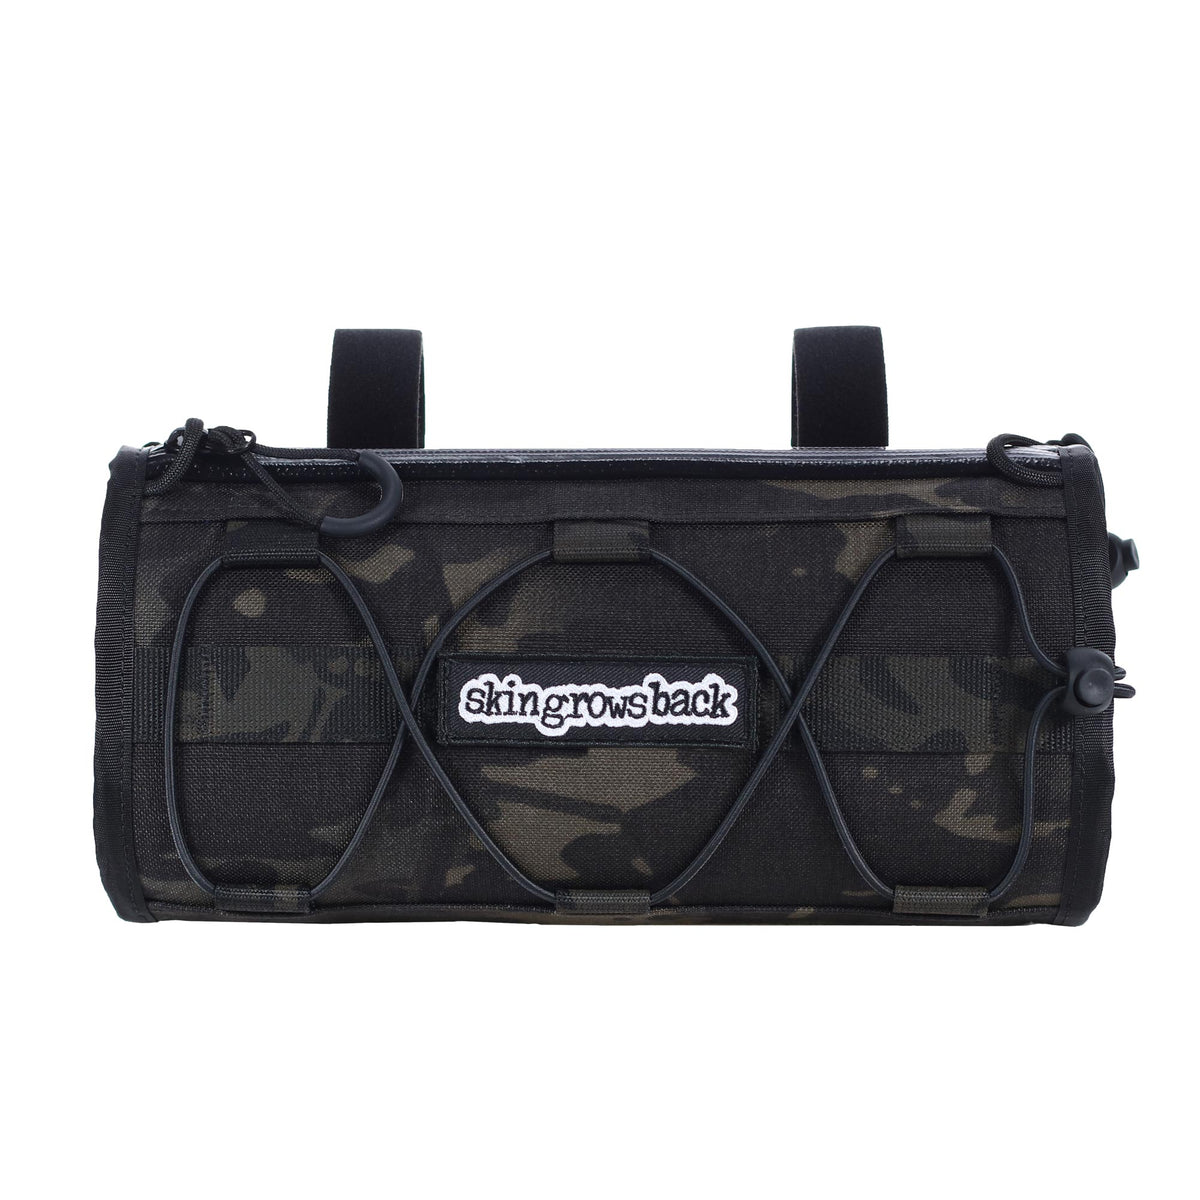 skingrowsback MultiCam Black cycling handlebar bag